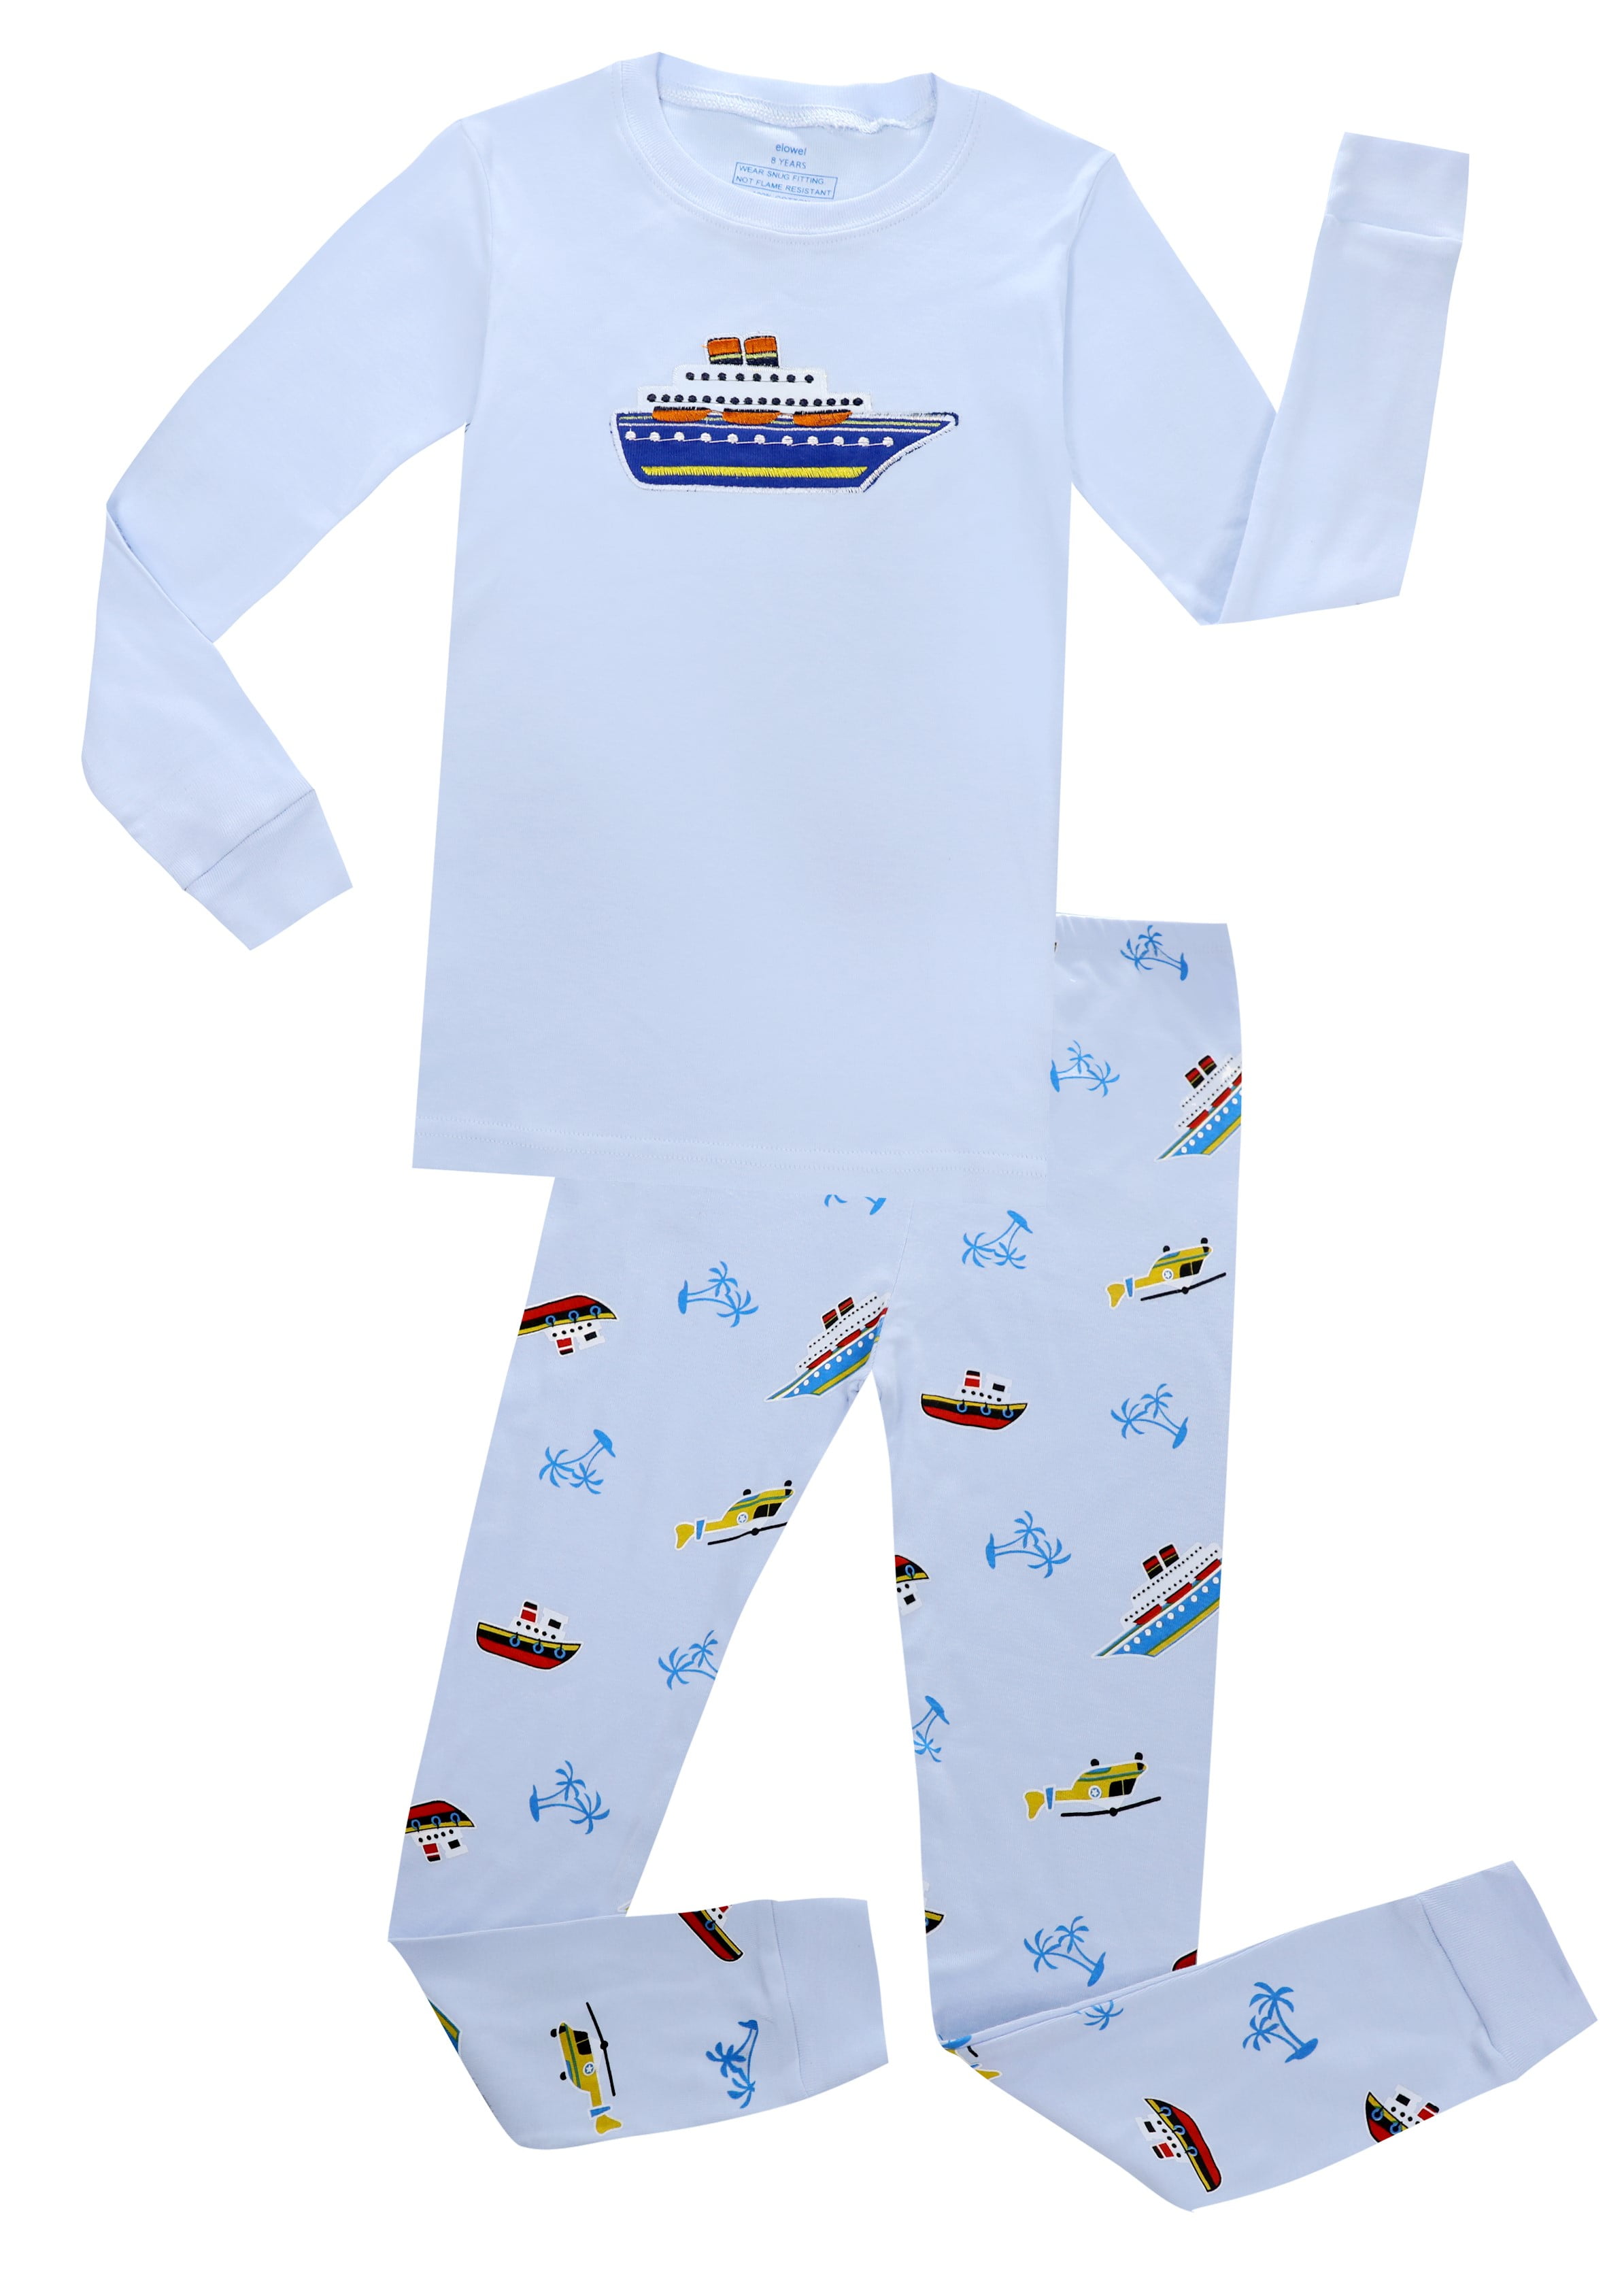 Details about   Baby Pajamas Set Toddler Sleepwear Little Boys' Clothes Kids 2 Piece Snug fit PJ 